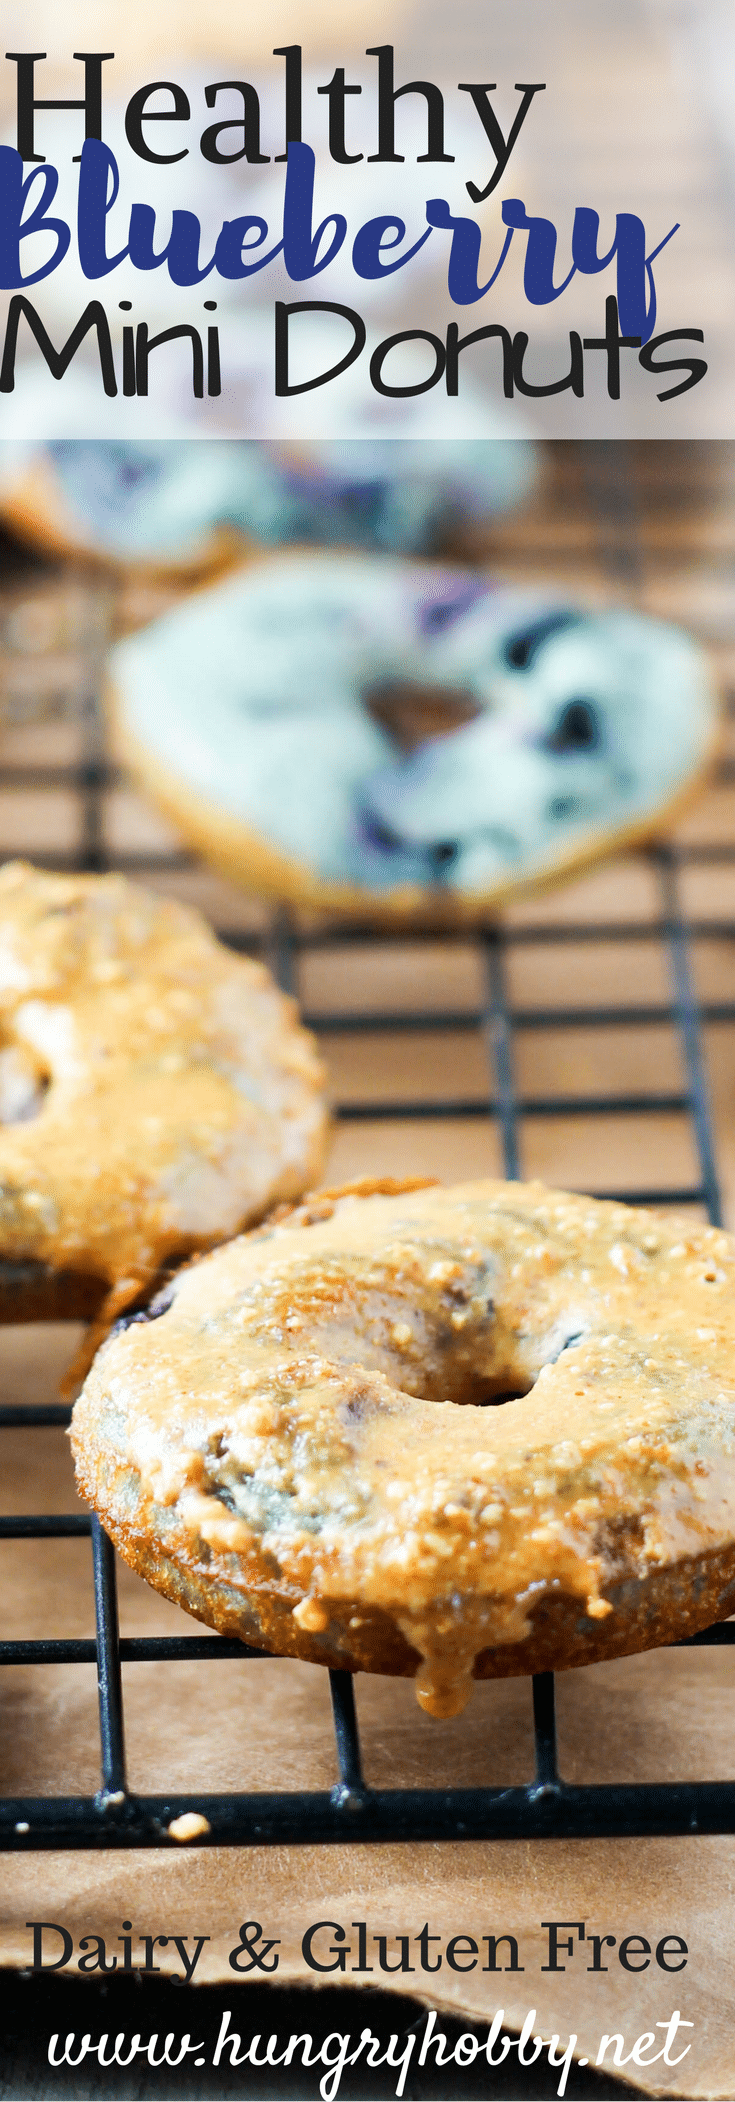 Healthy Peanut Butter Glazed Blueberry Mini Donuts (Dairy Free, Gluten ...